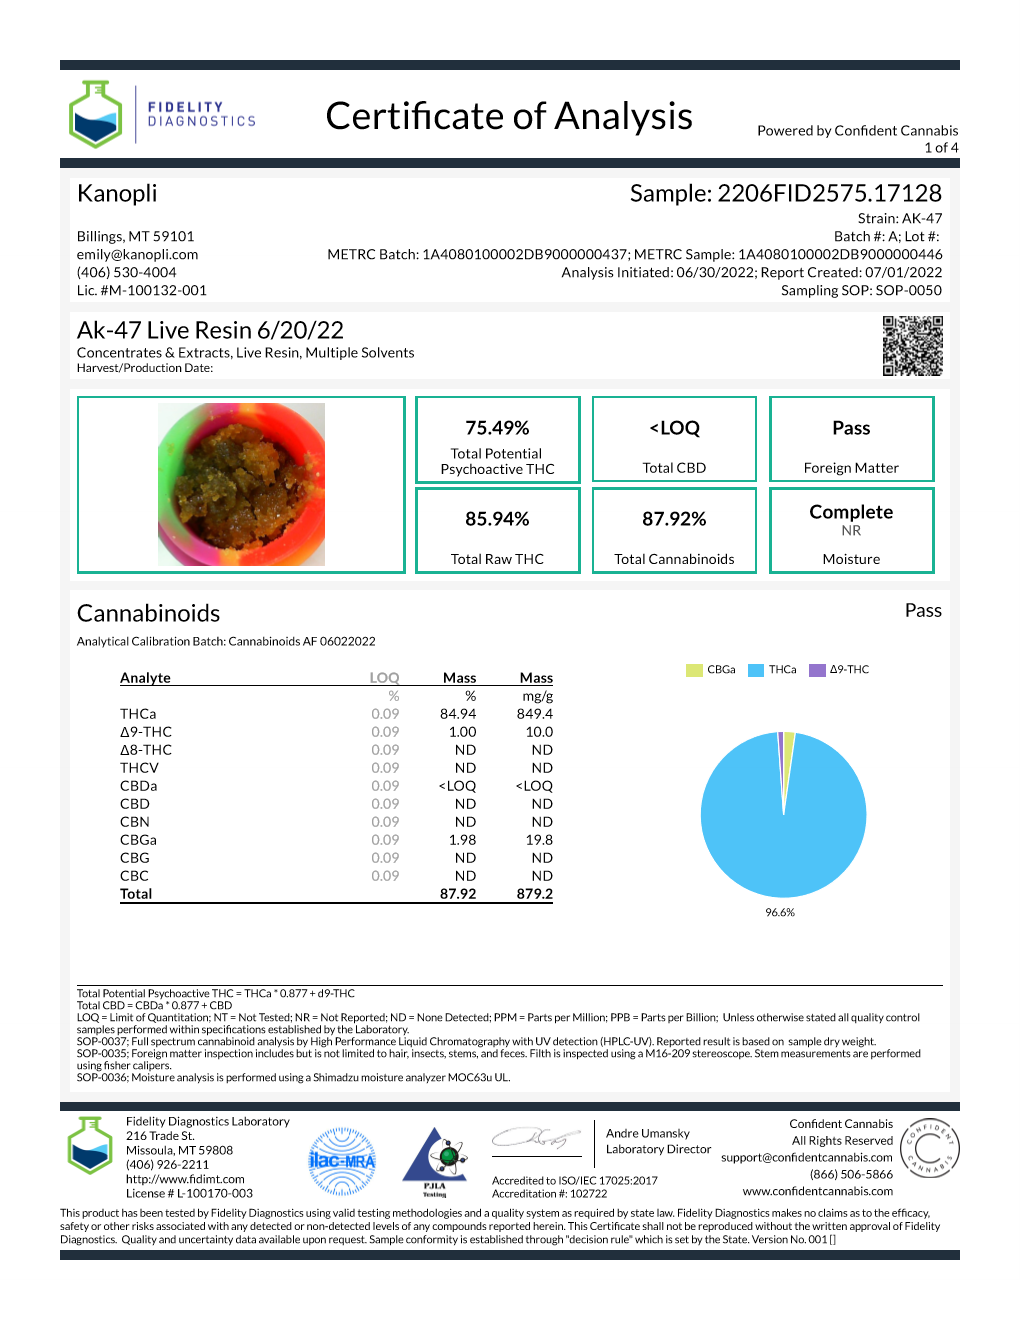 1 gram AK-47 Live Resin (Sativa) 75.49% THC 6/2022